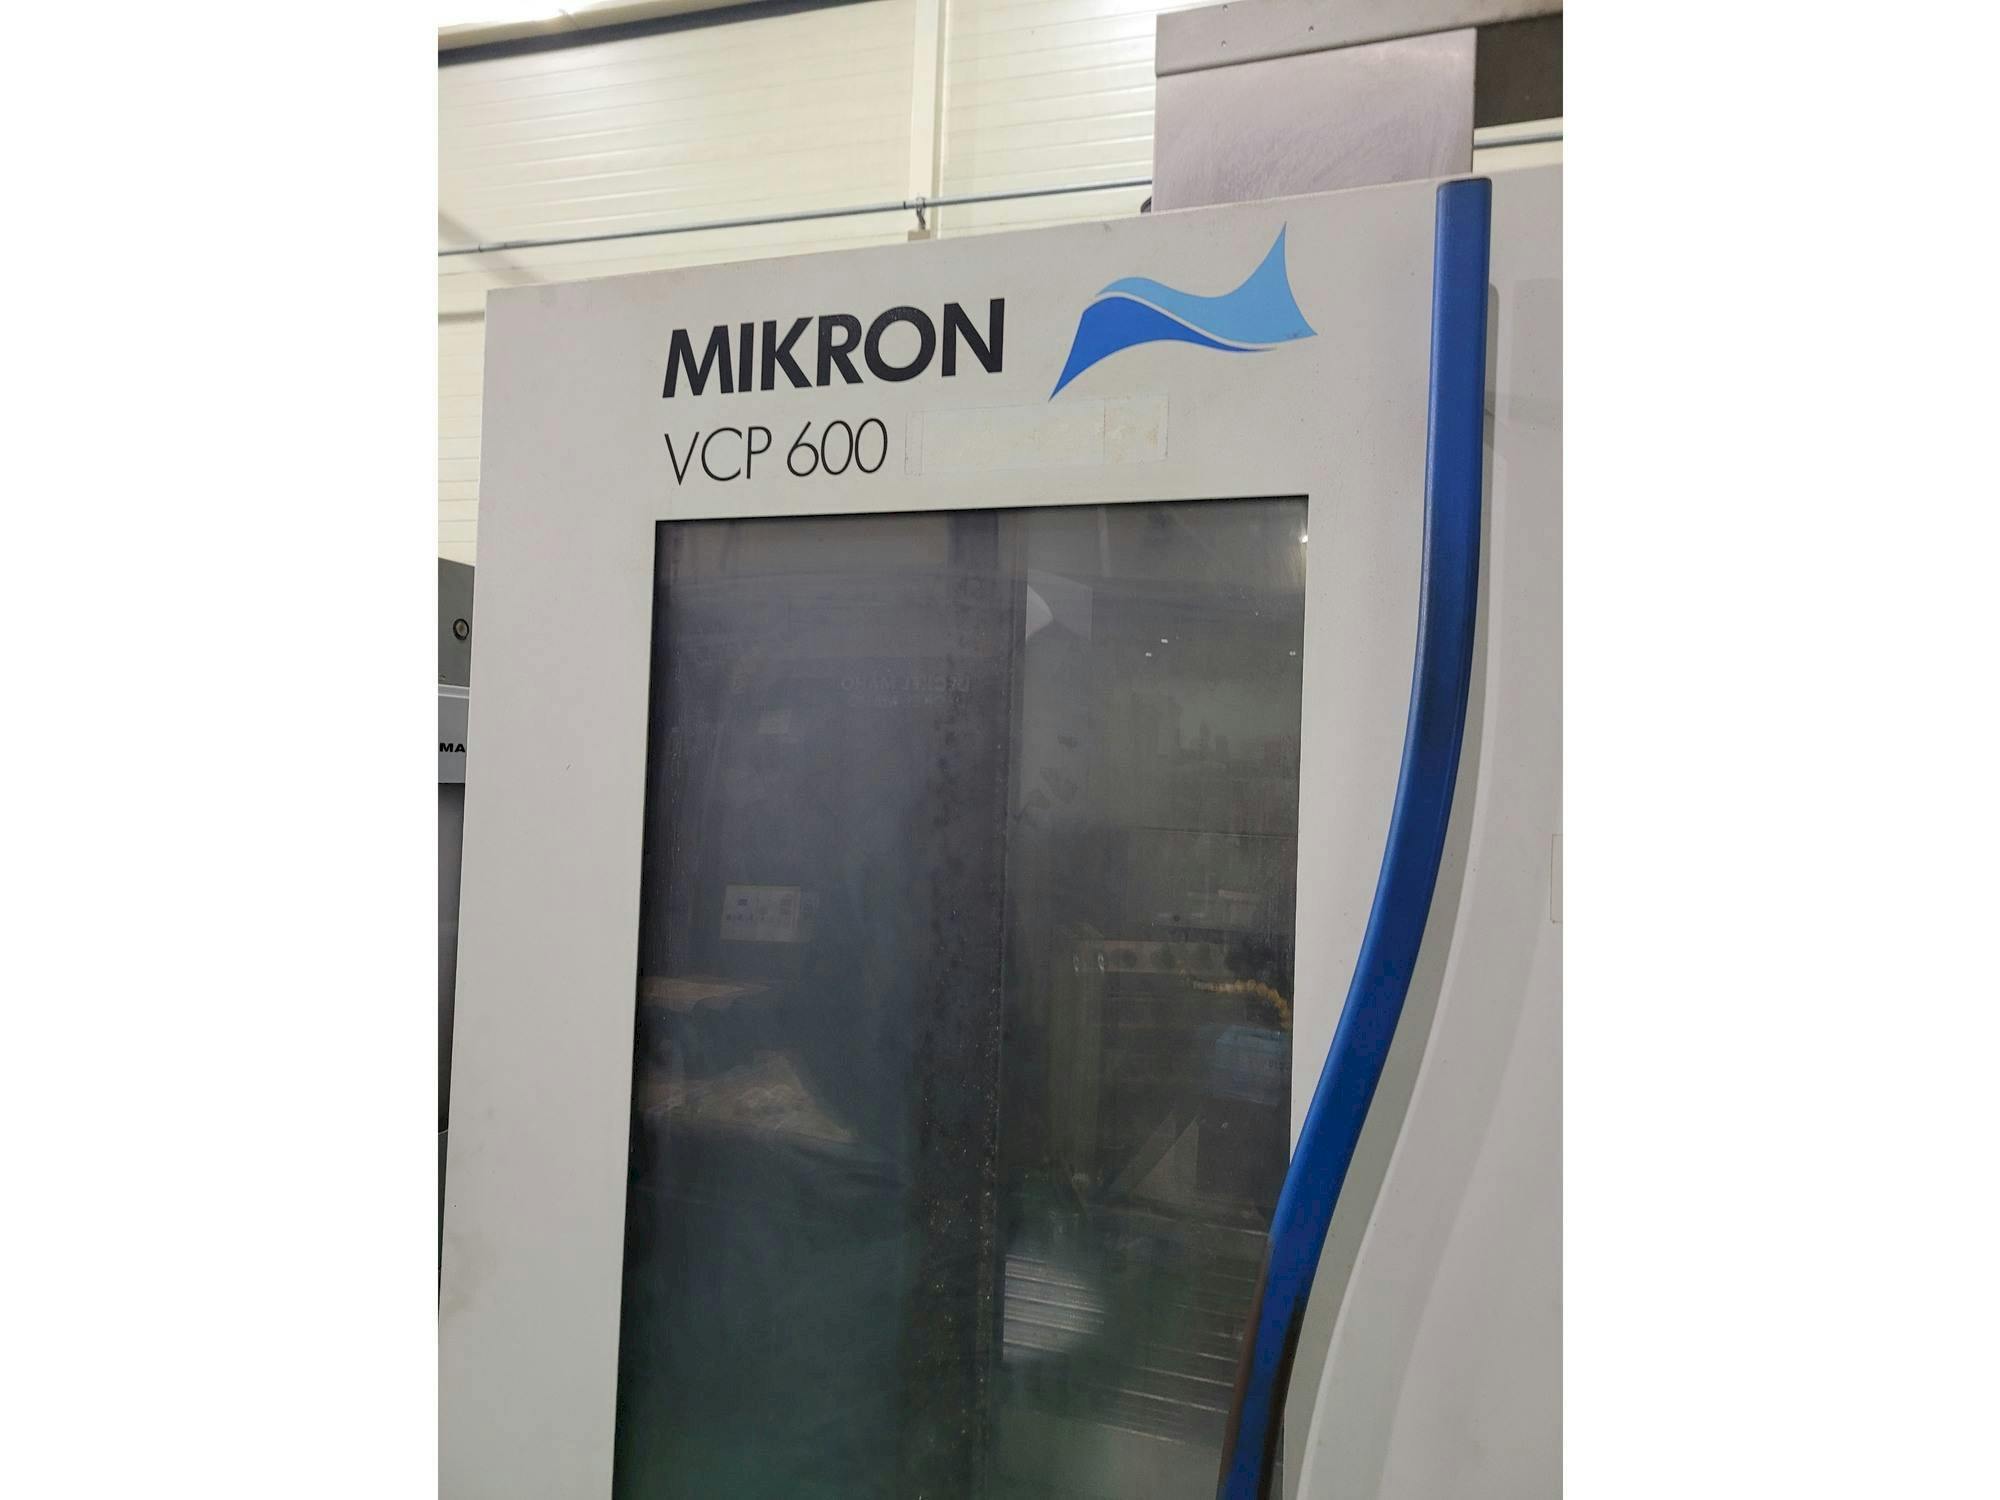 Vista frontal de la máquina MIKRON VCP 600